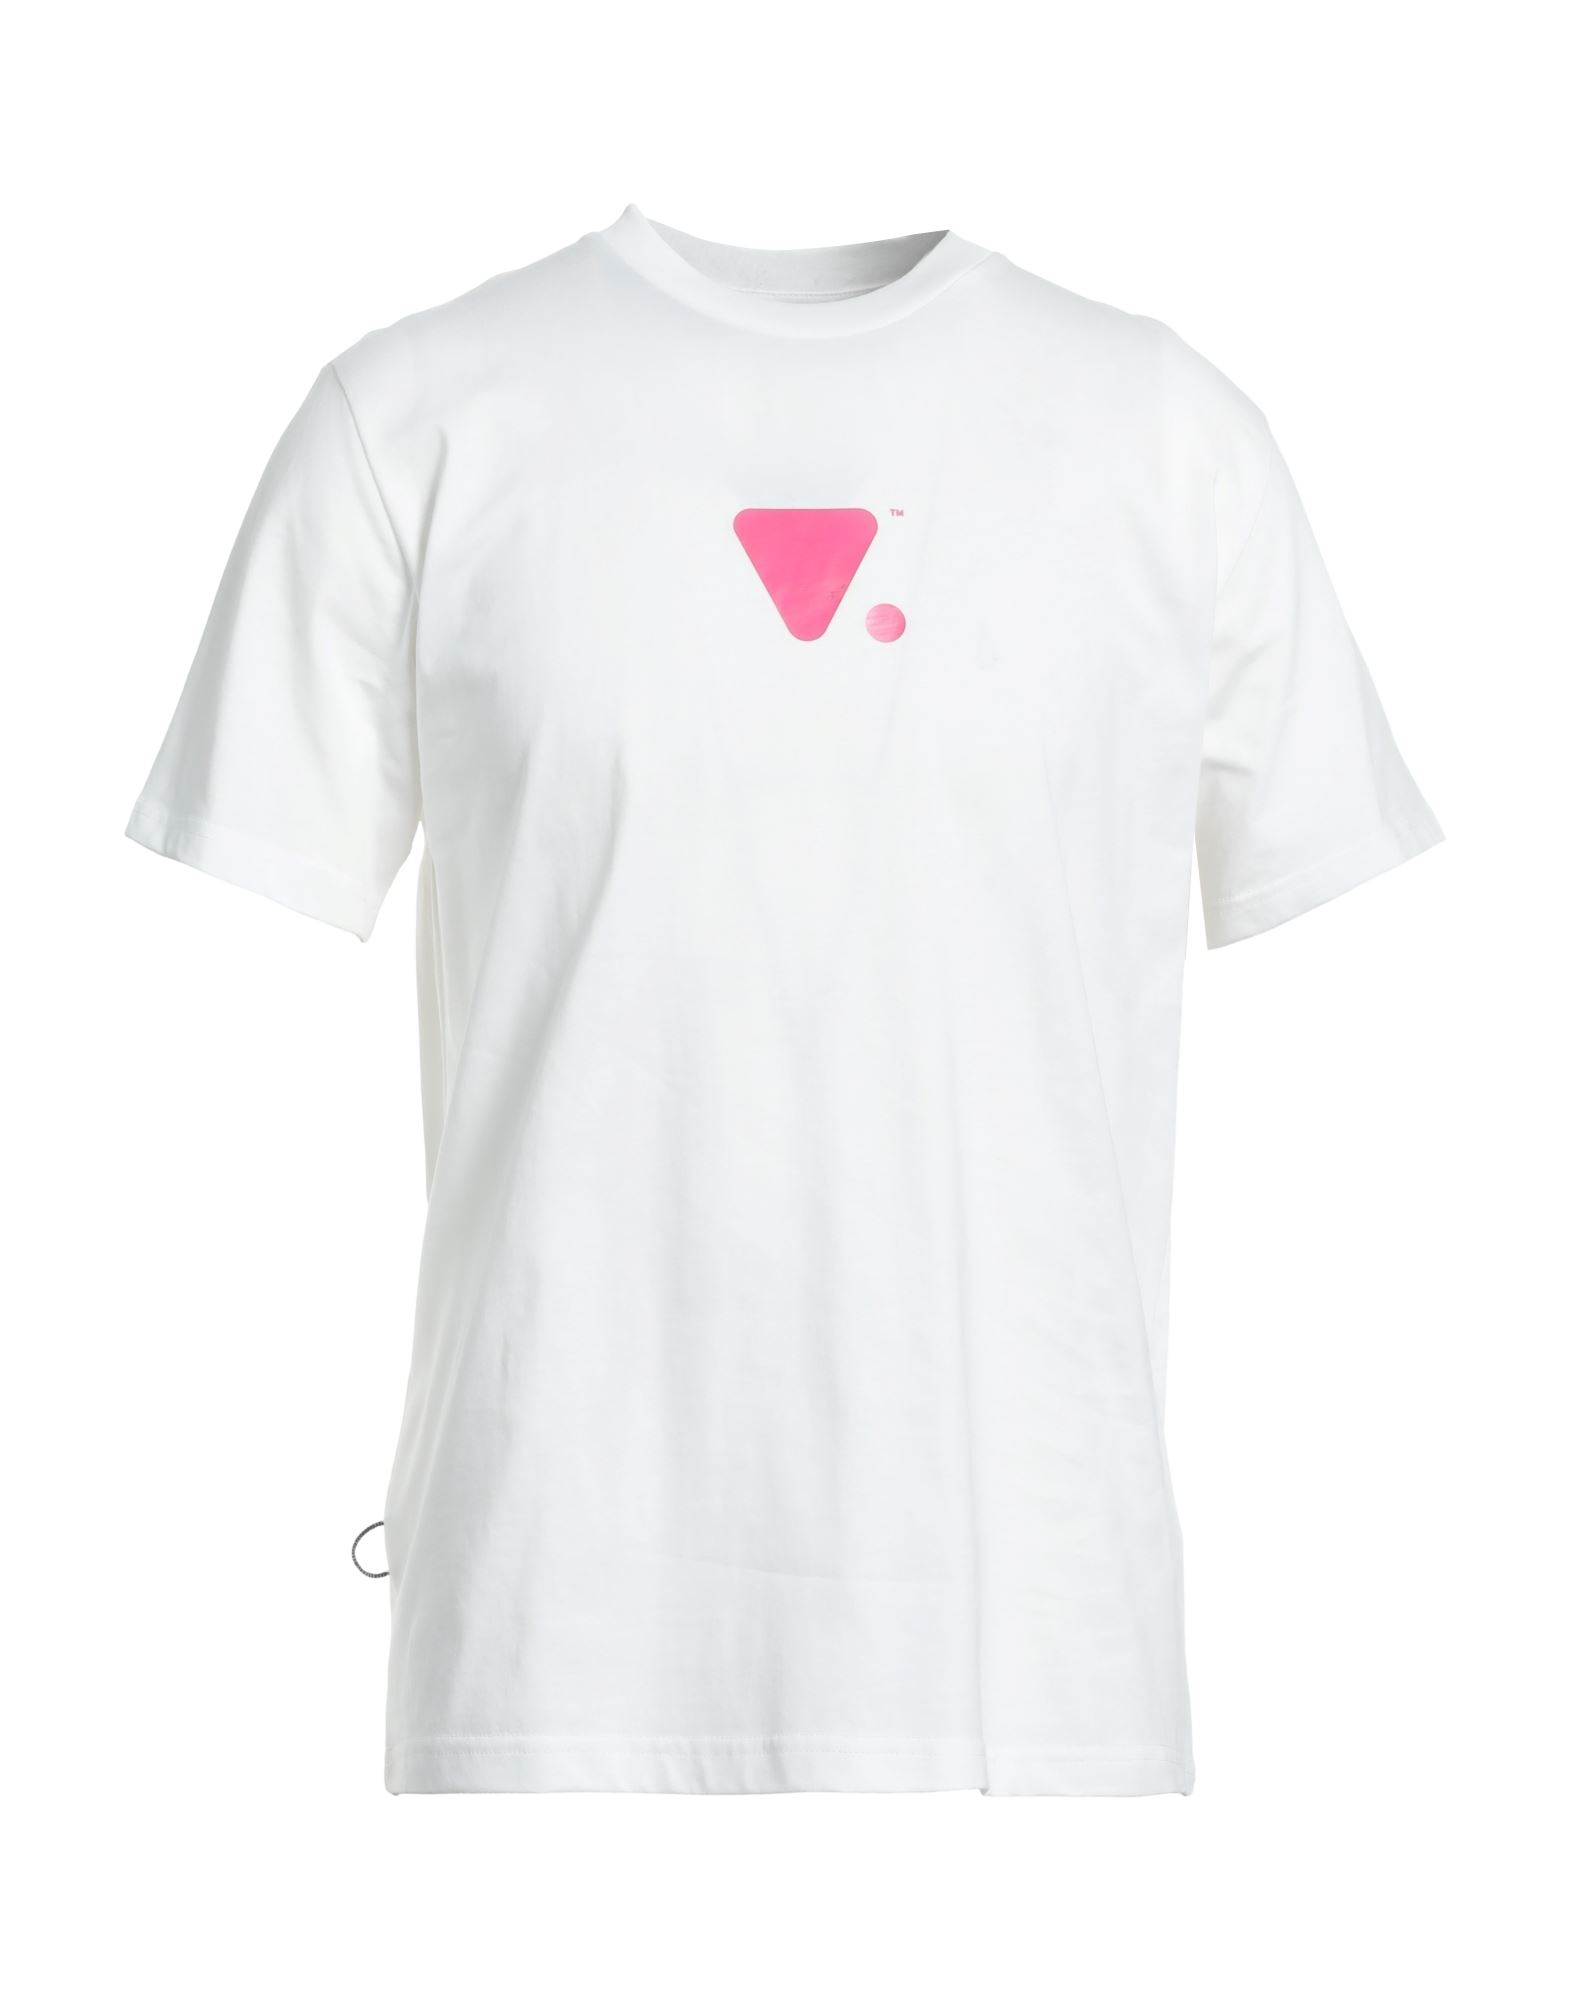 Valvola. T-shirts In White